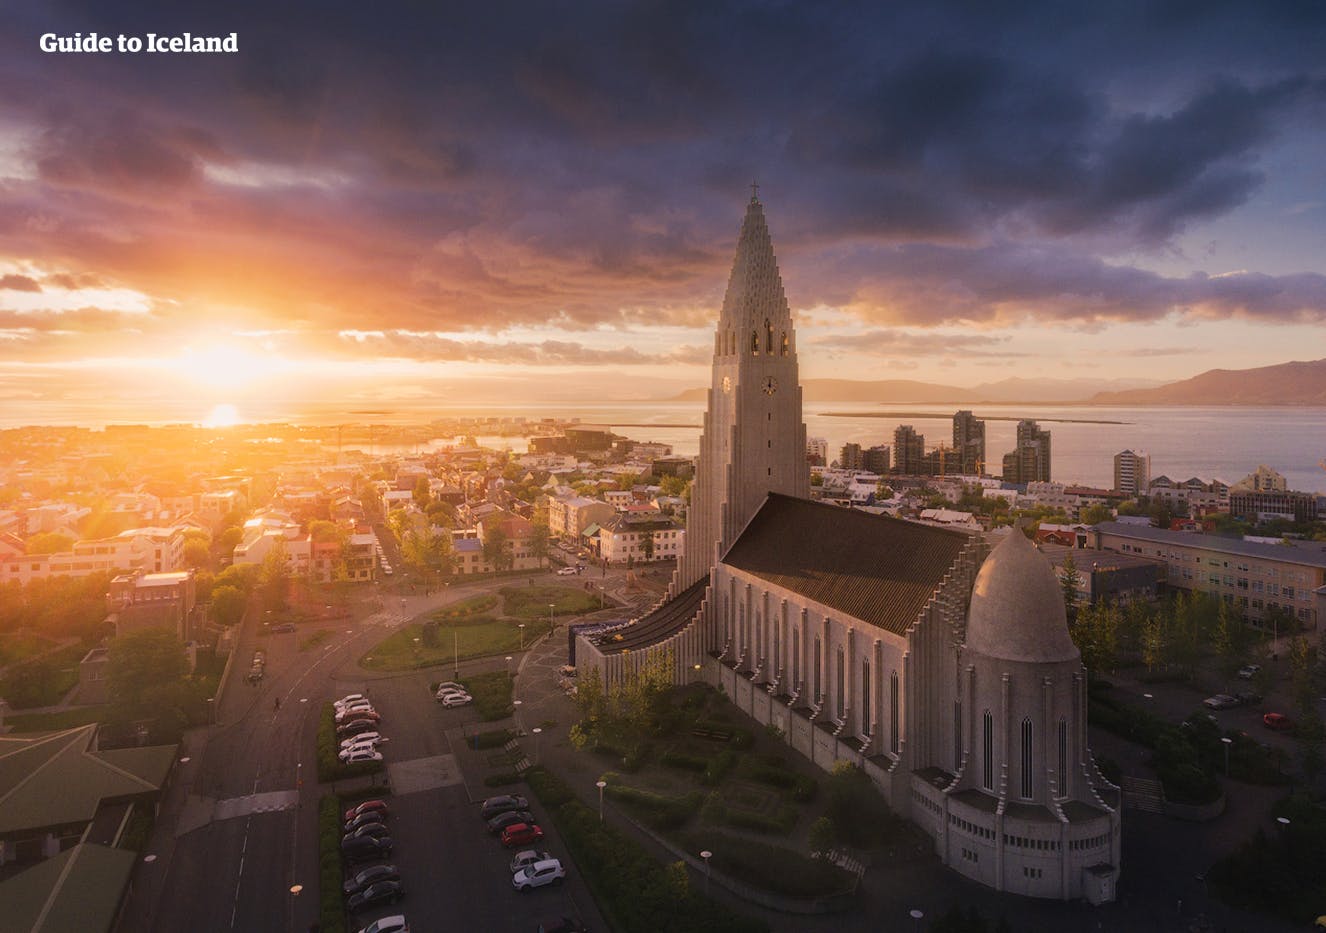 Hallgrímskirkja is just one of the many cultural landmarks in Reykjavik.